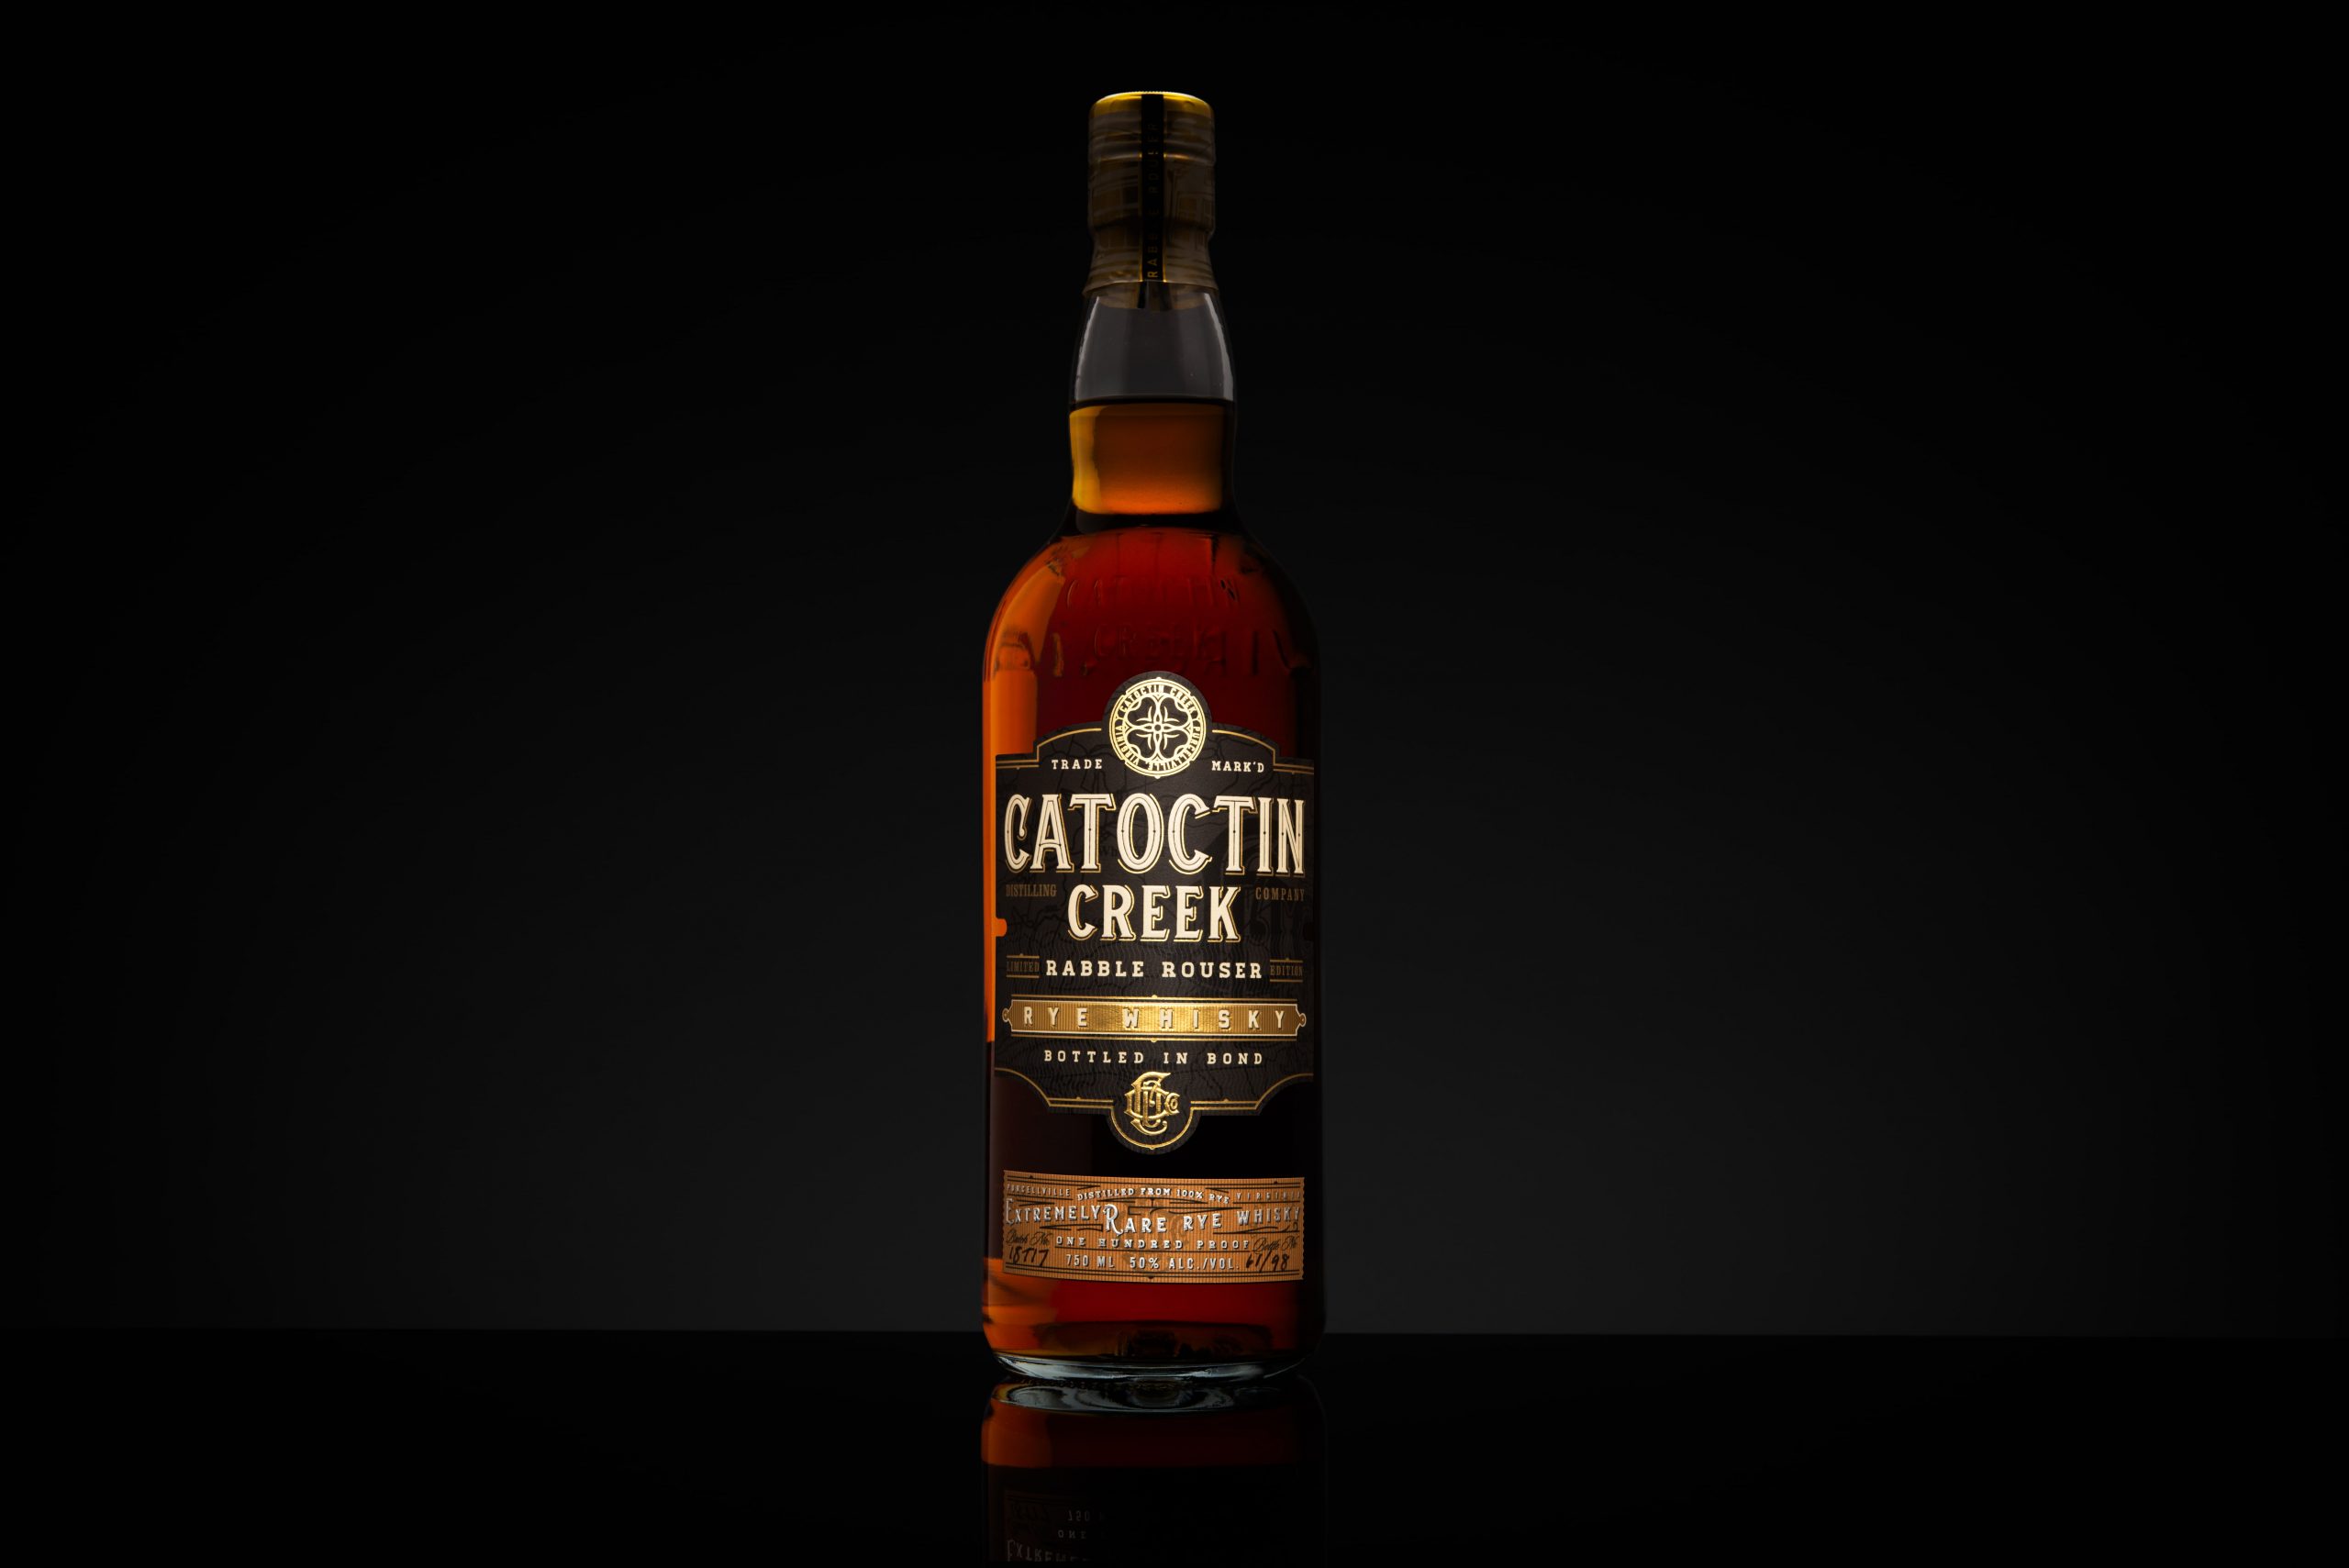 Catoctin Creek Distillery Limited Release Bottled-in-Bond Rye